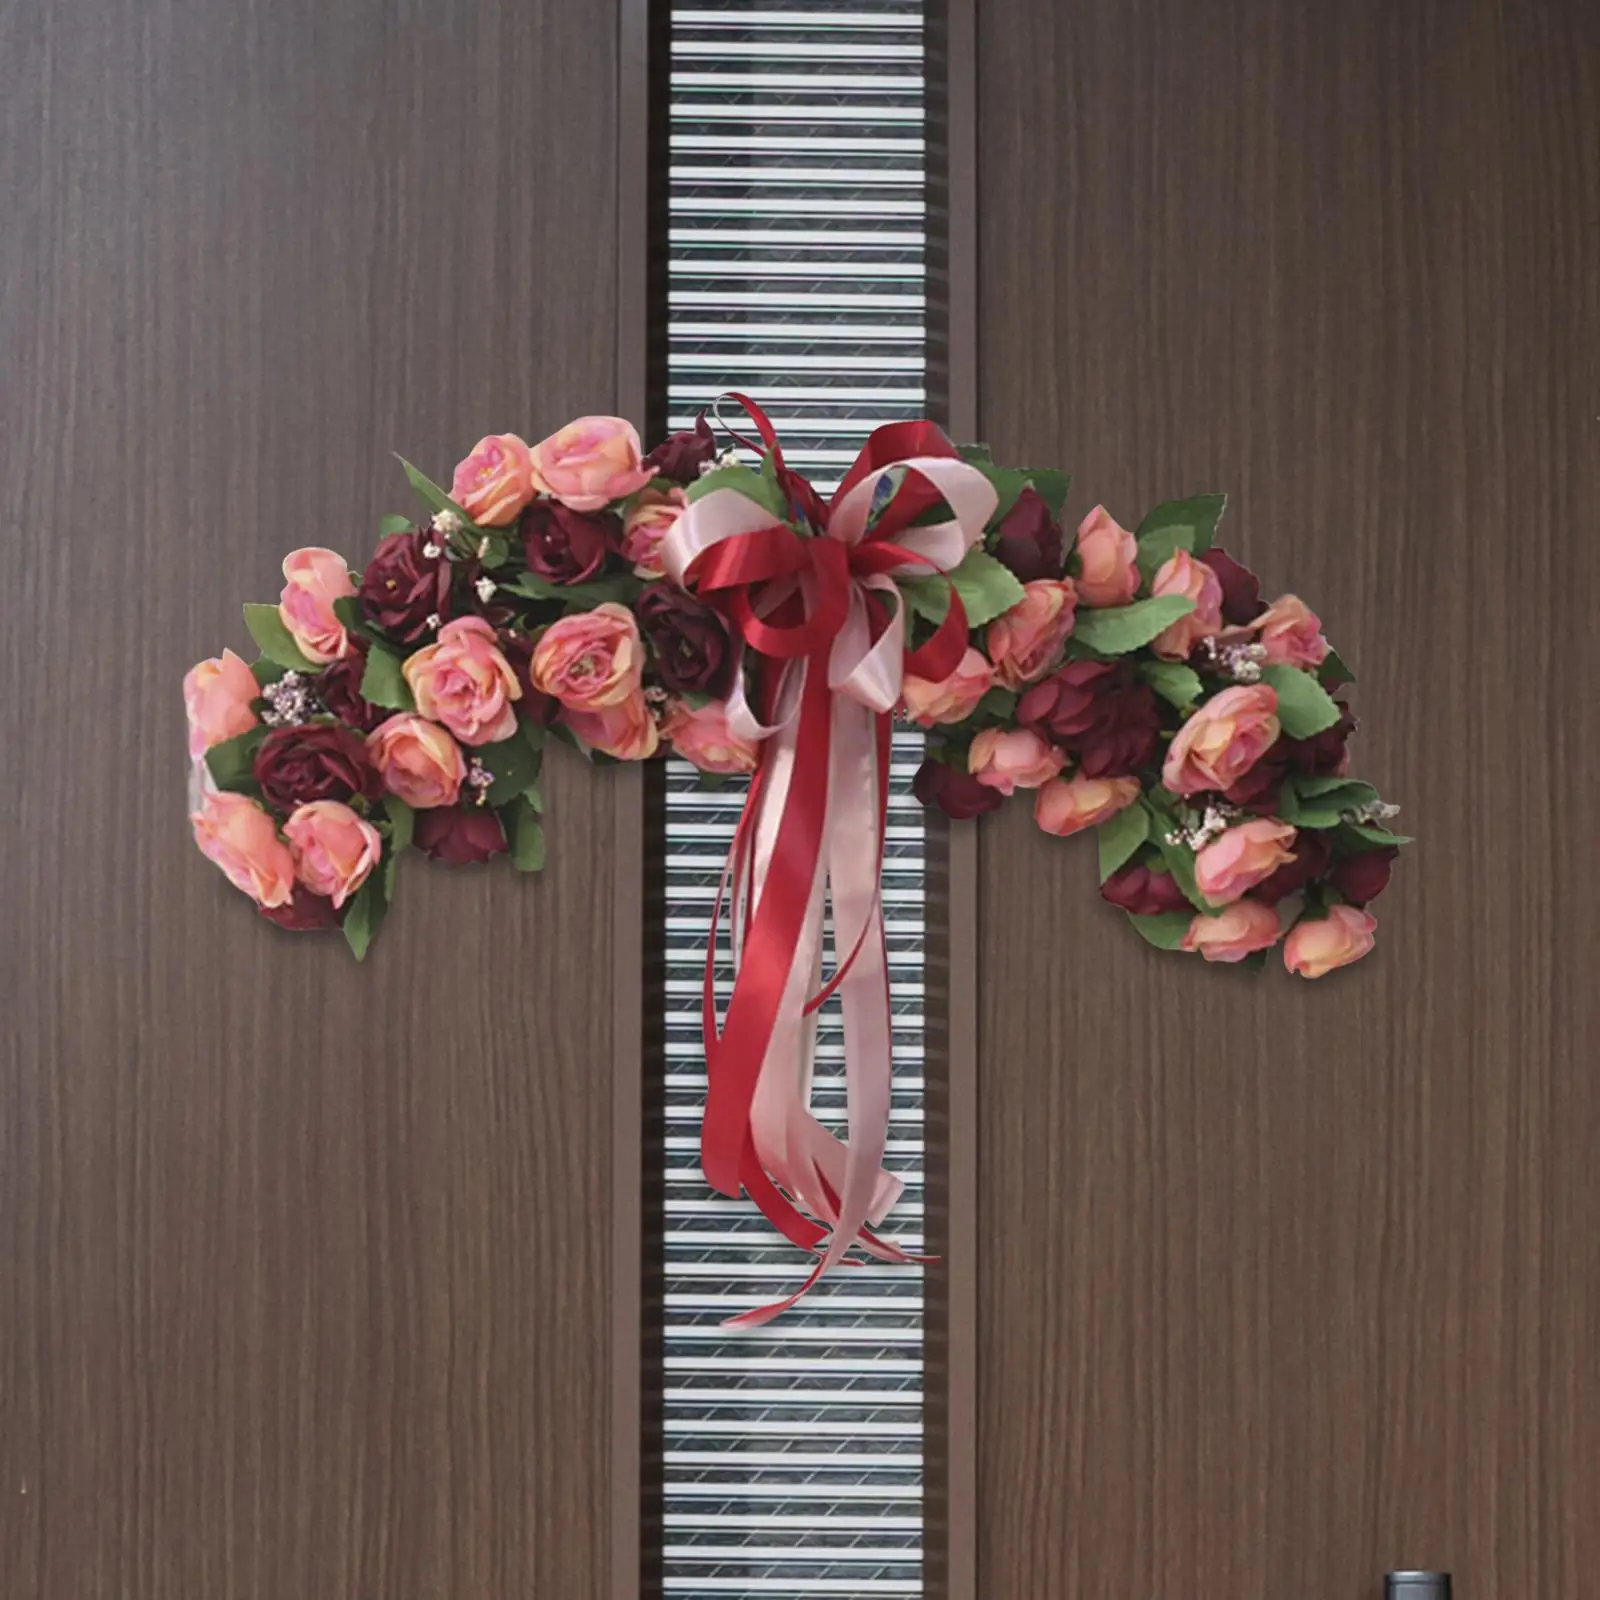 50cm Wedding Arch Flowers Rose Artificial Bouquet Hanging Floral Swag Door Wreath for Wall Summer Indoor Outdoor Decor